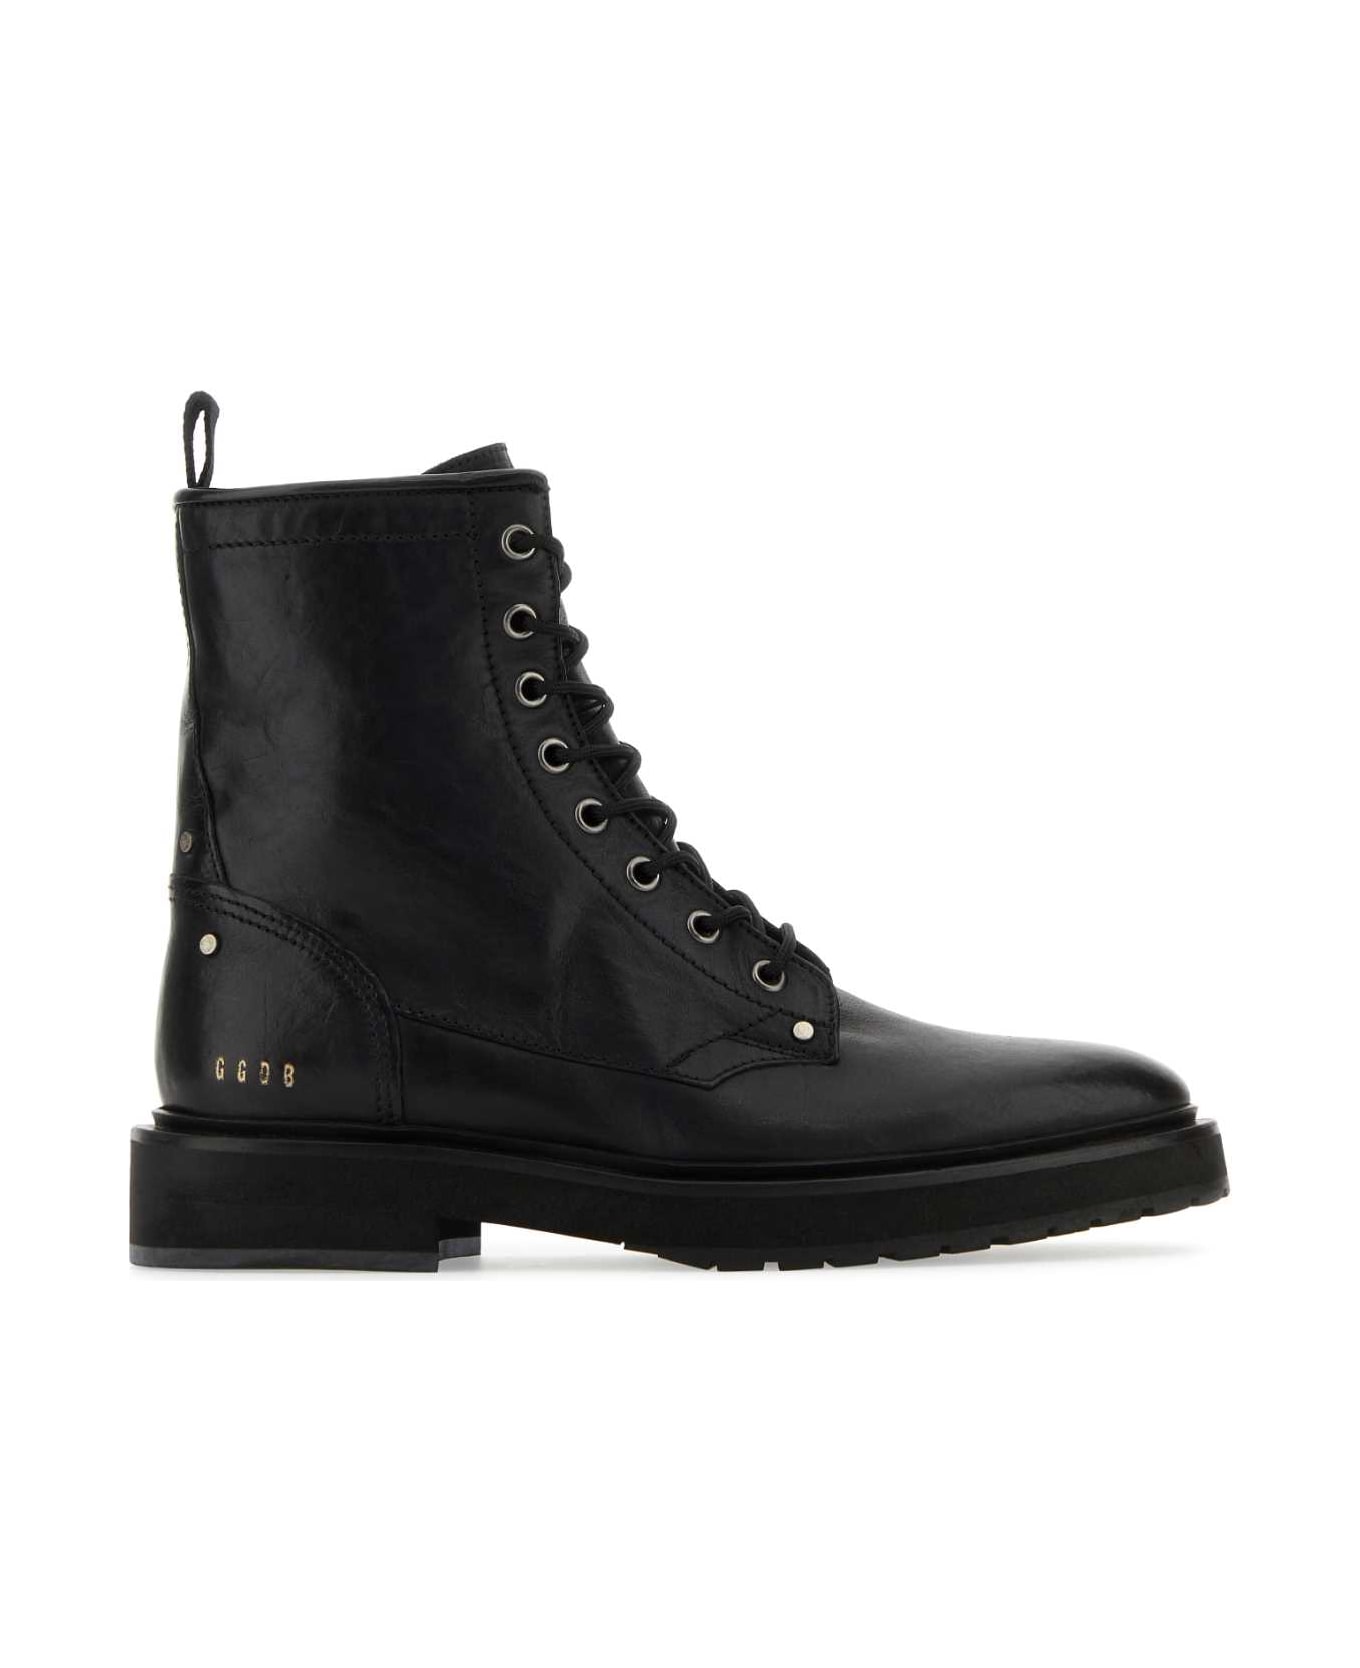 Golden Goose Black Leather Combat Ankle Boots - BLACK